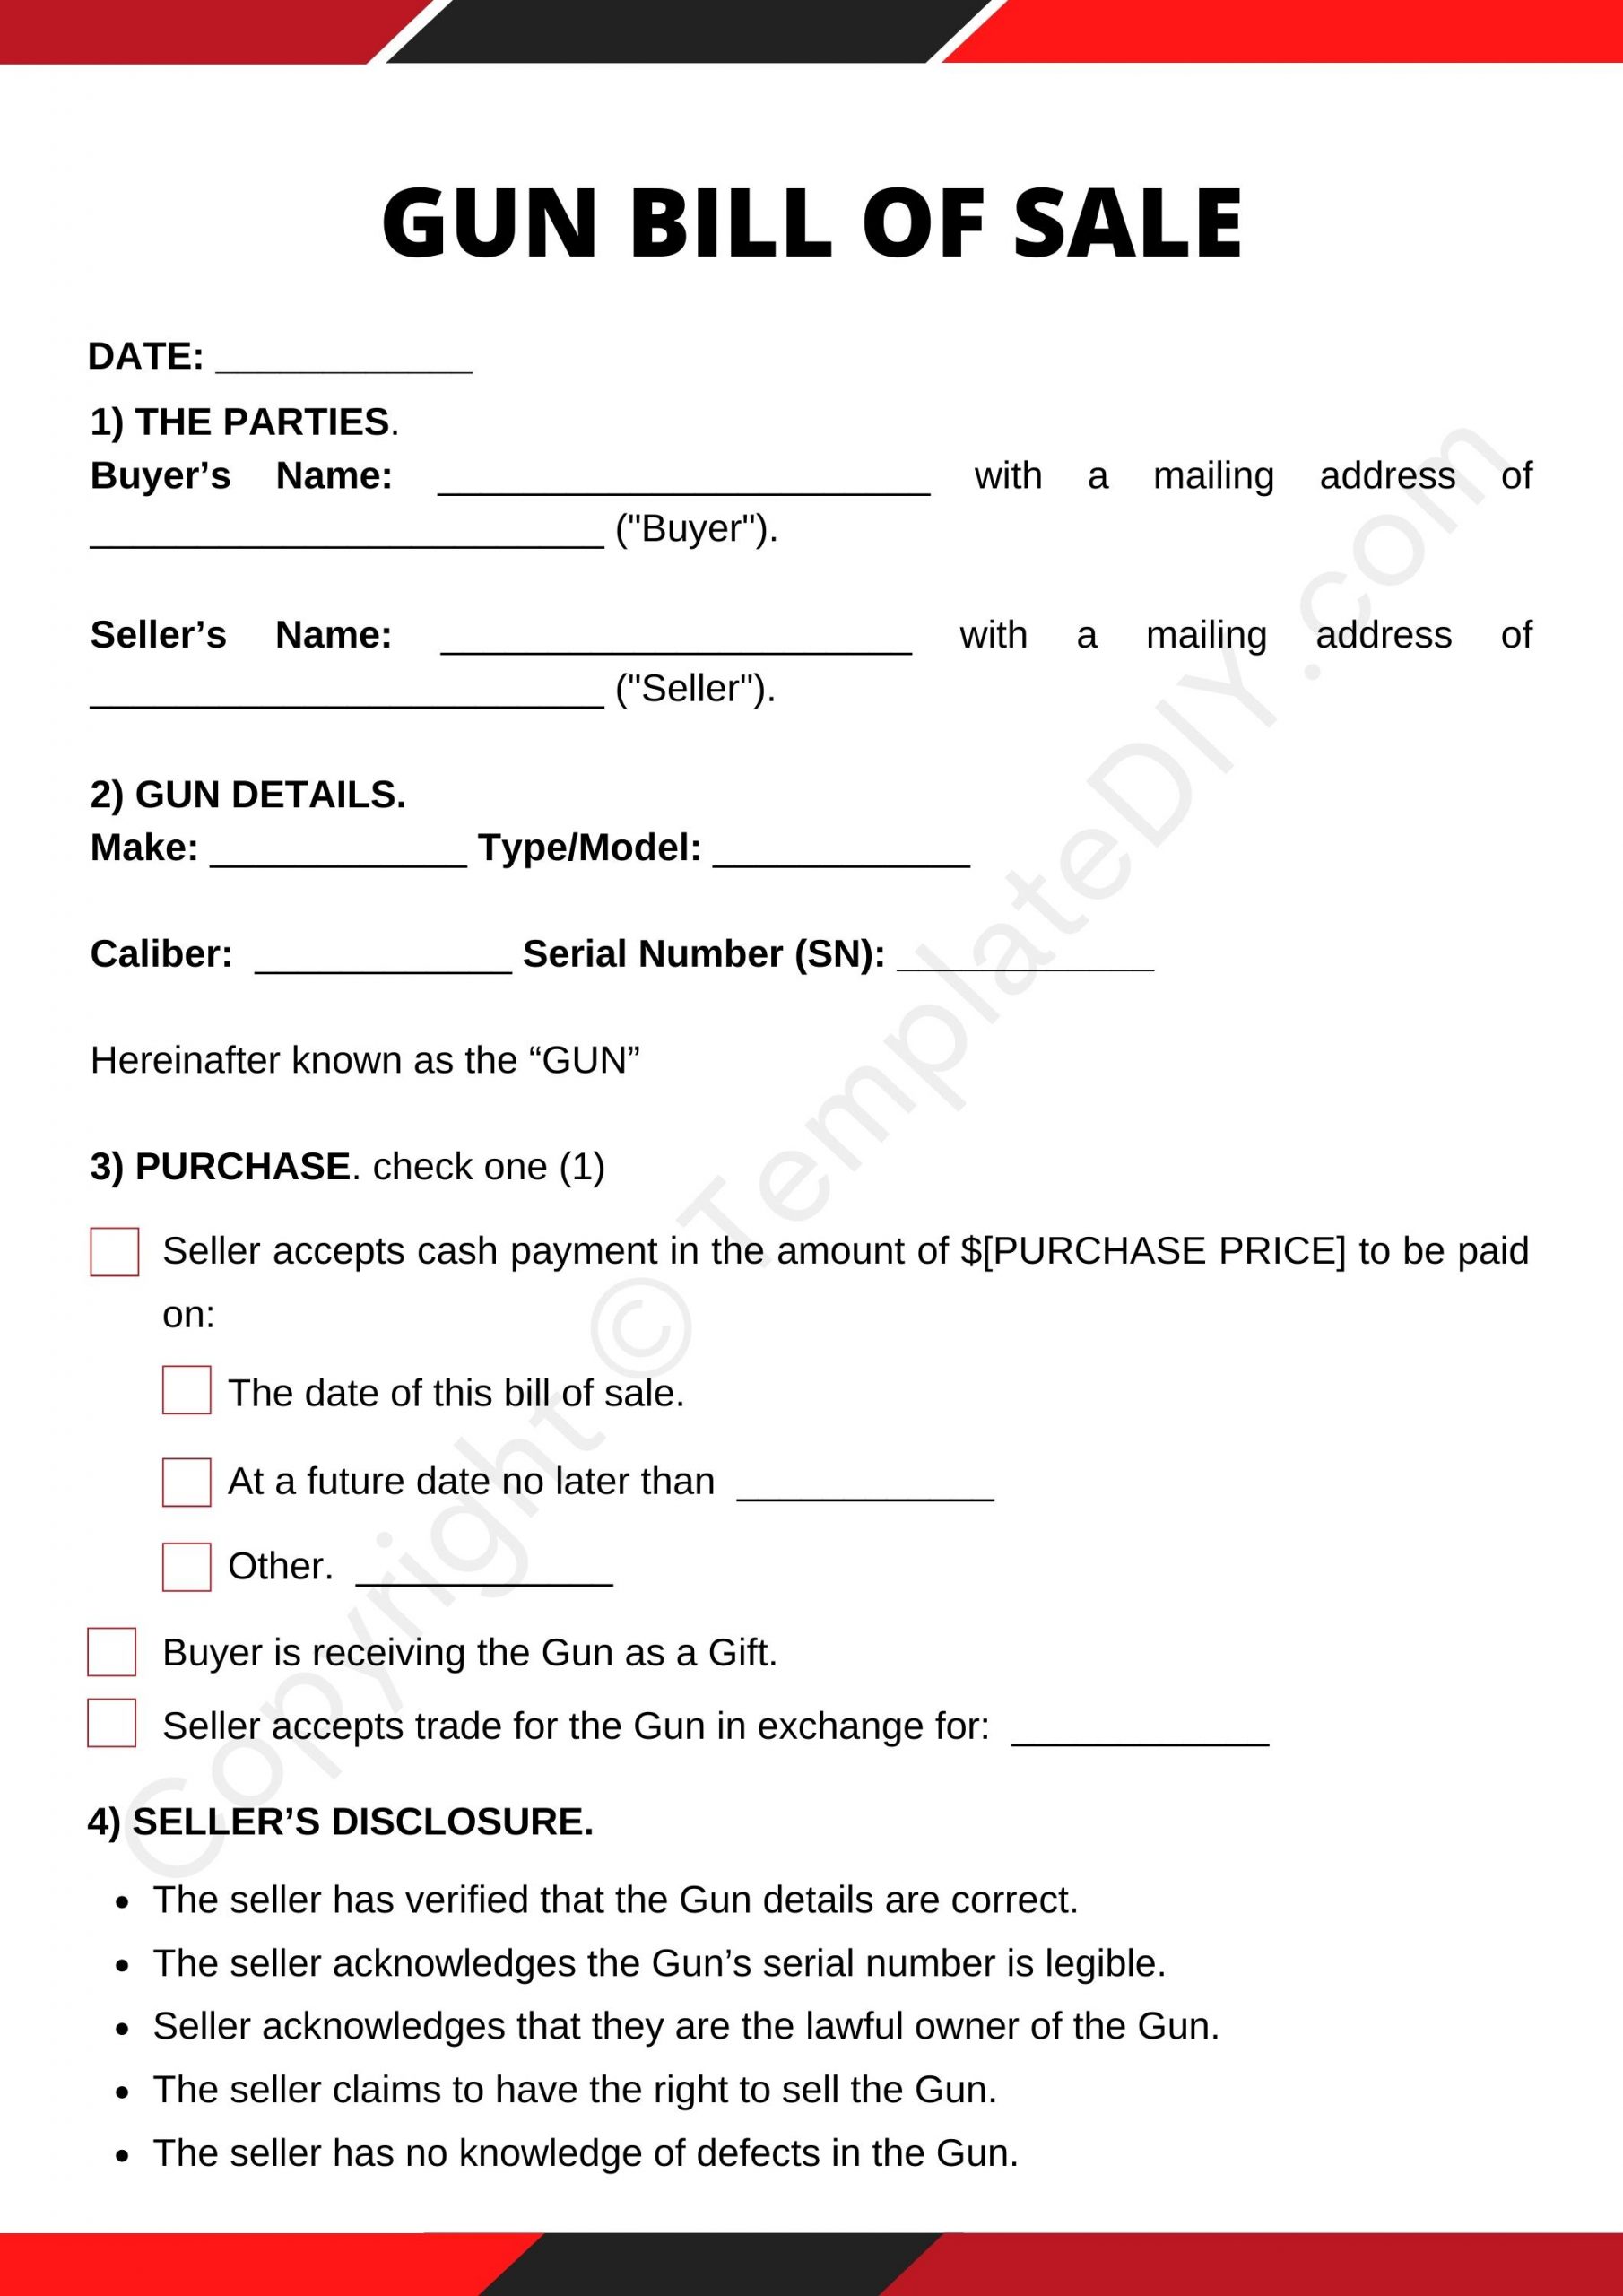 gun-bill-of-sale-blank-printable-form-template-in-pdf-word